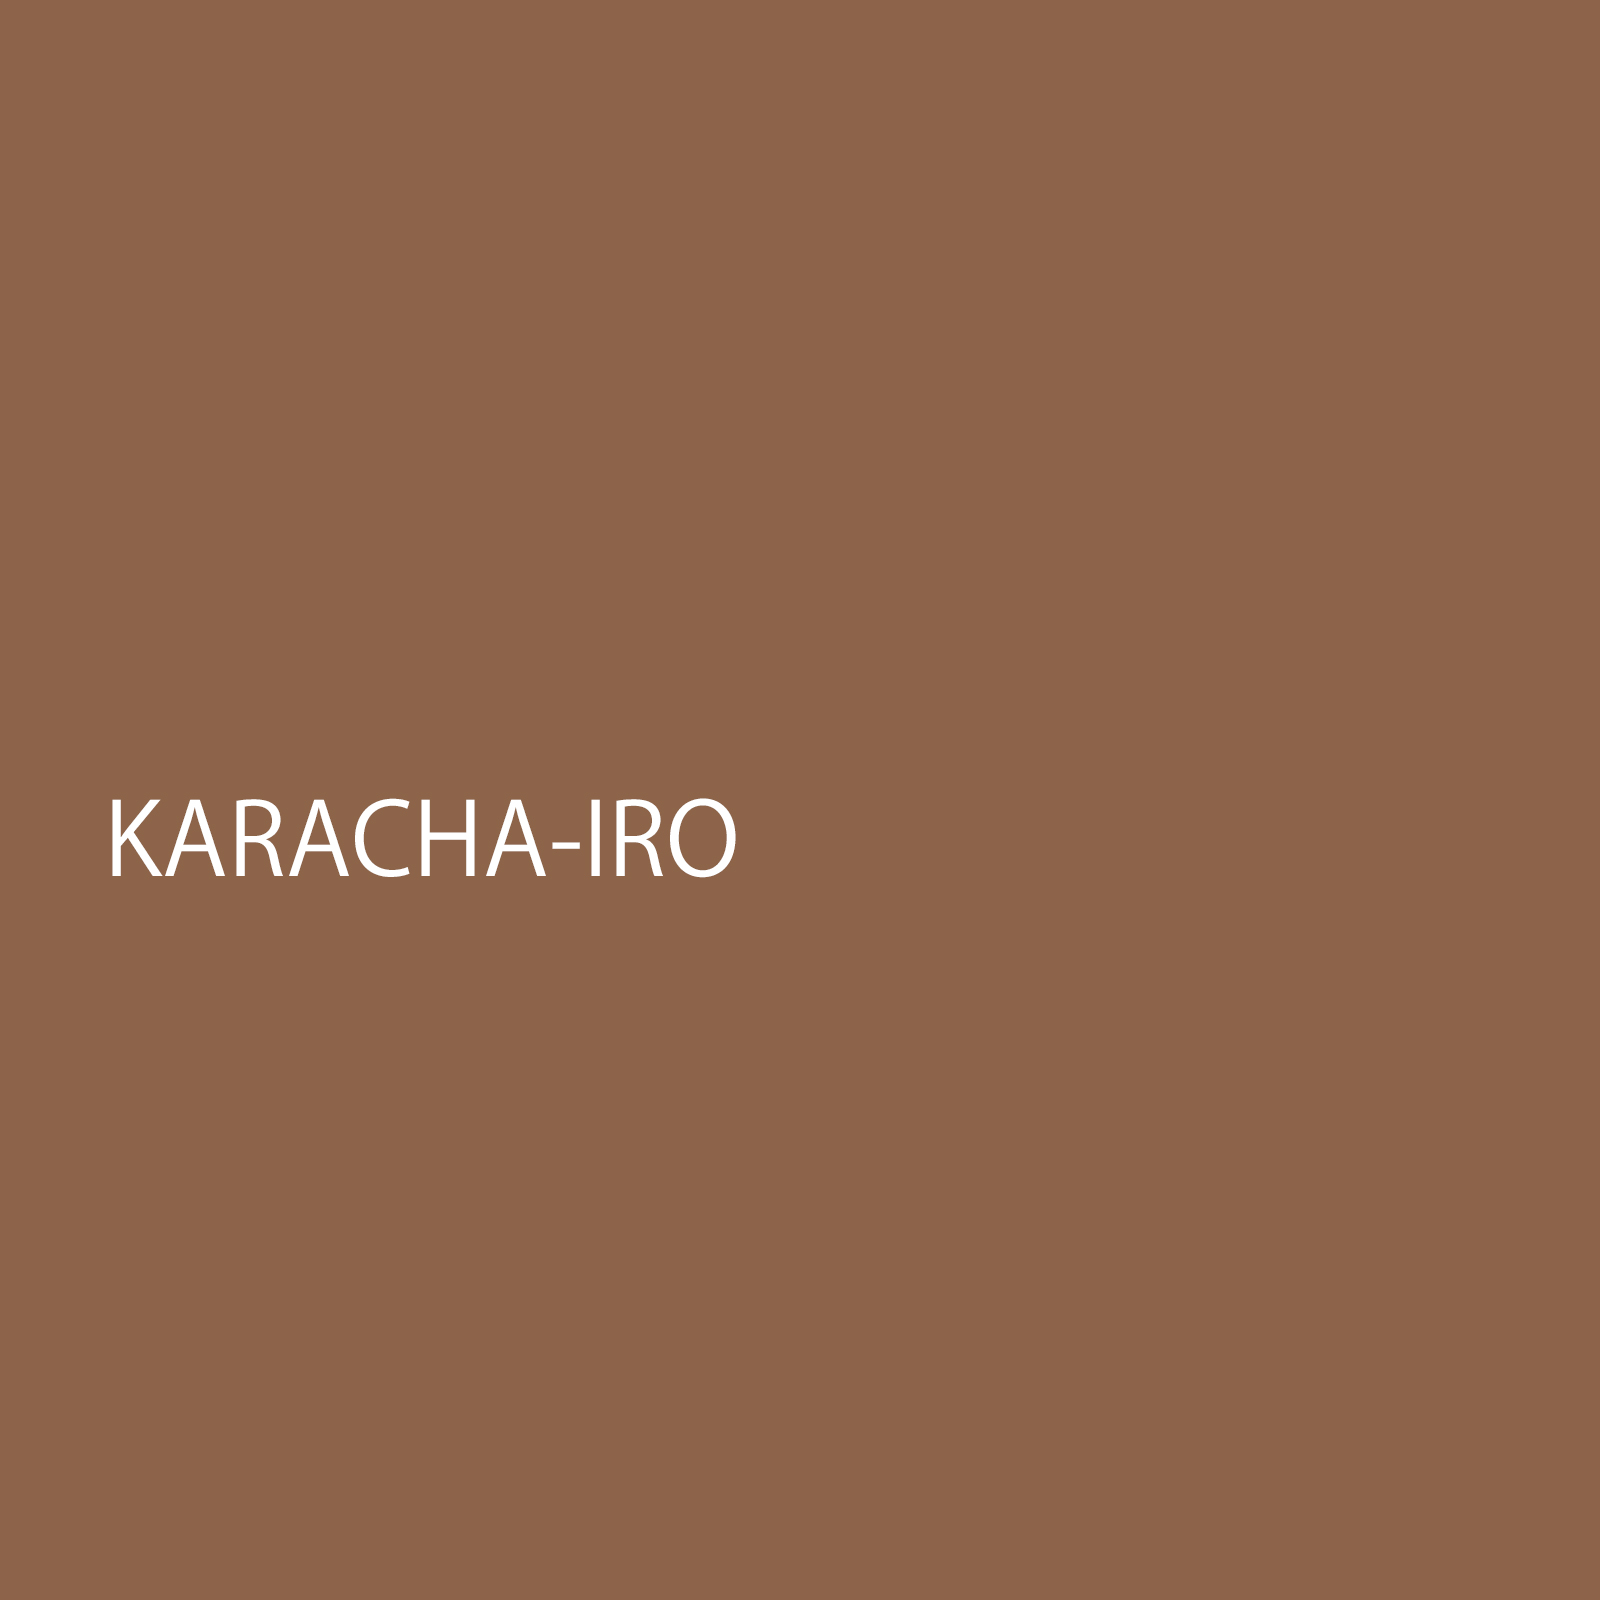 karachairo.jpg